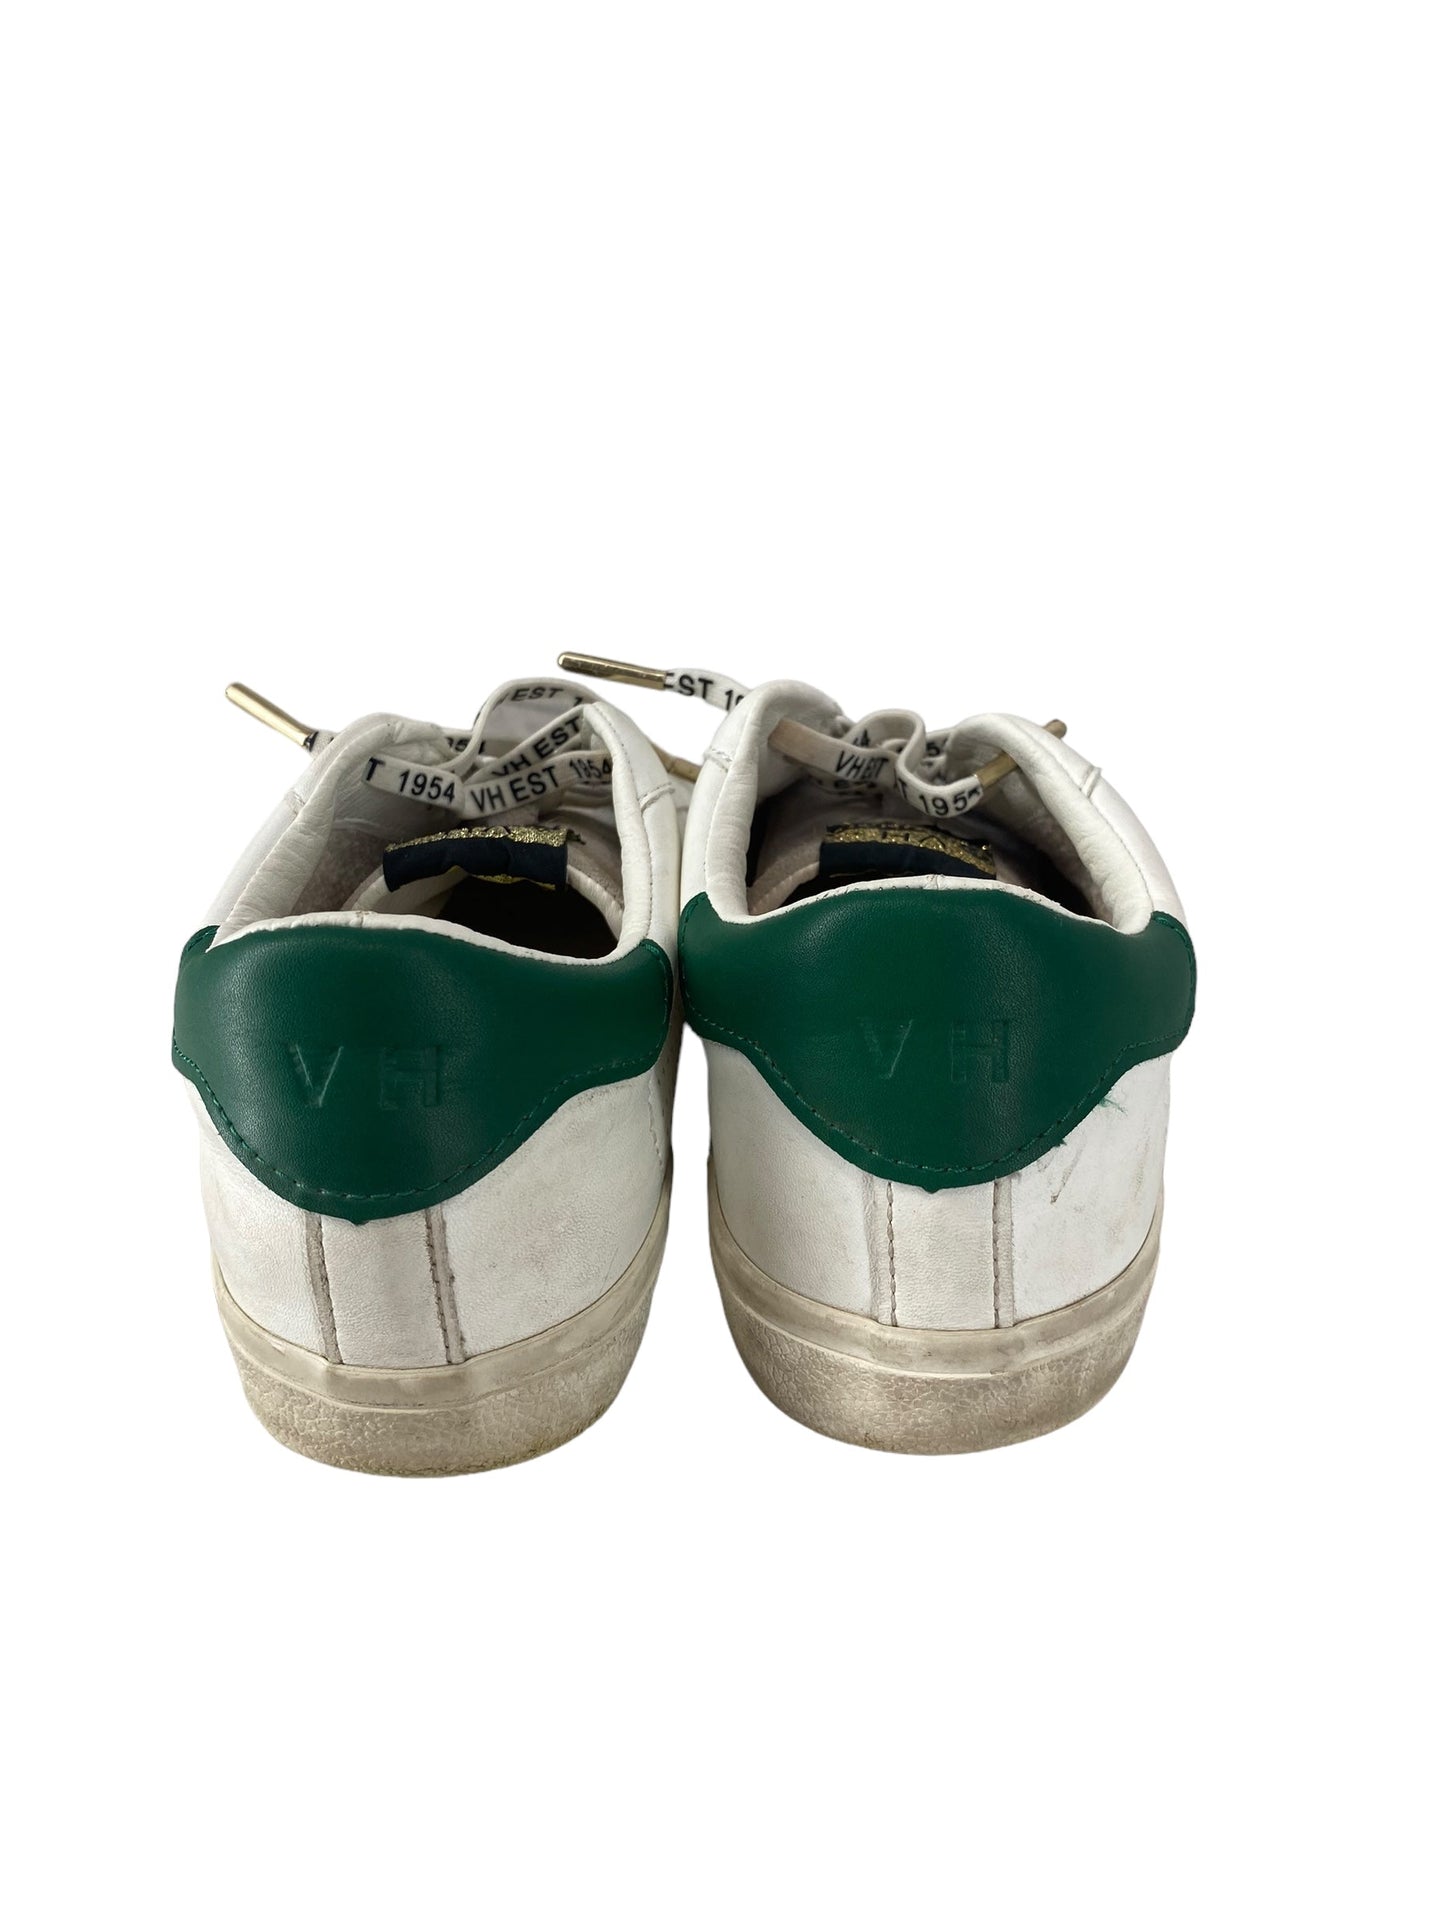 White Shoes Sneakers Vintage Havana, Size 7.5